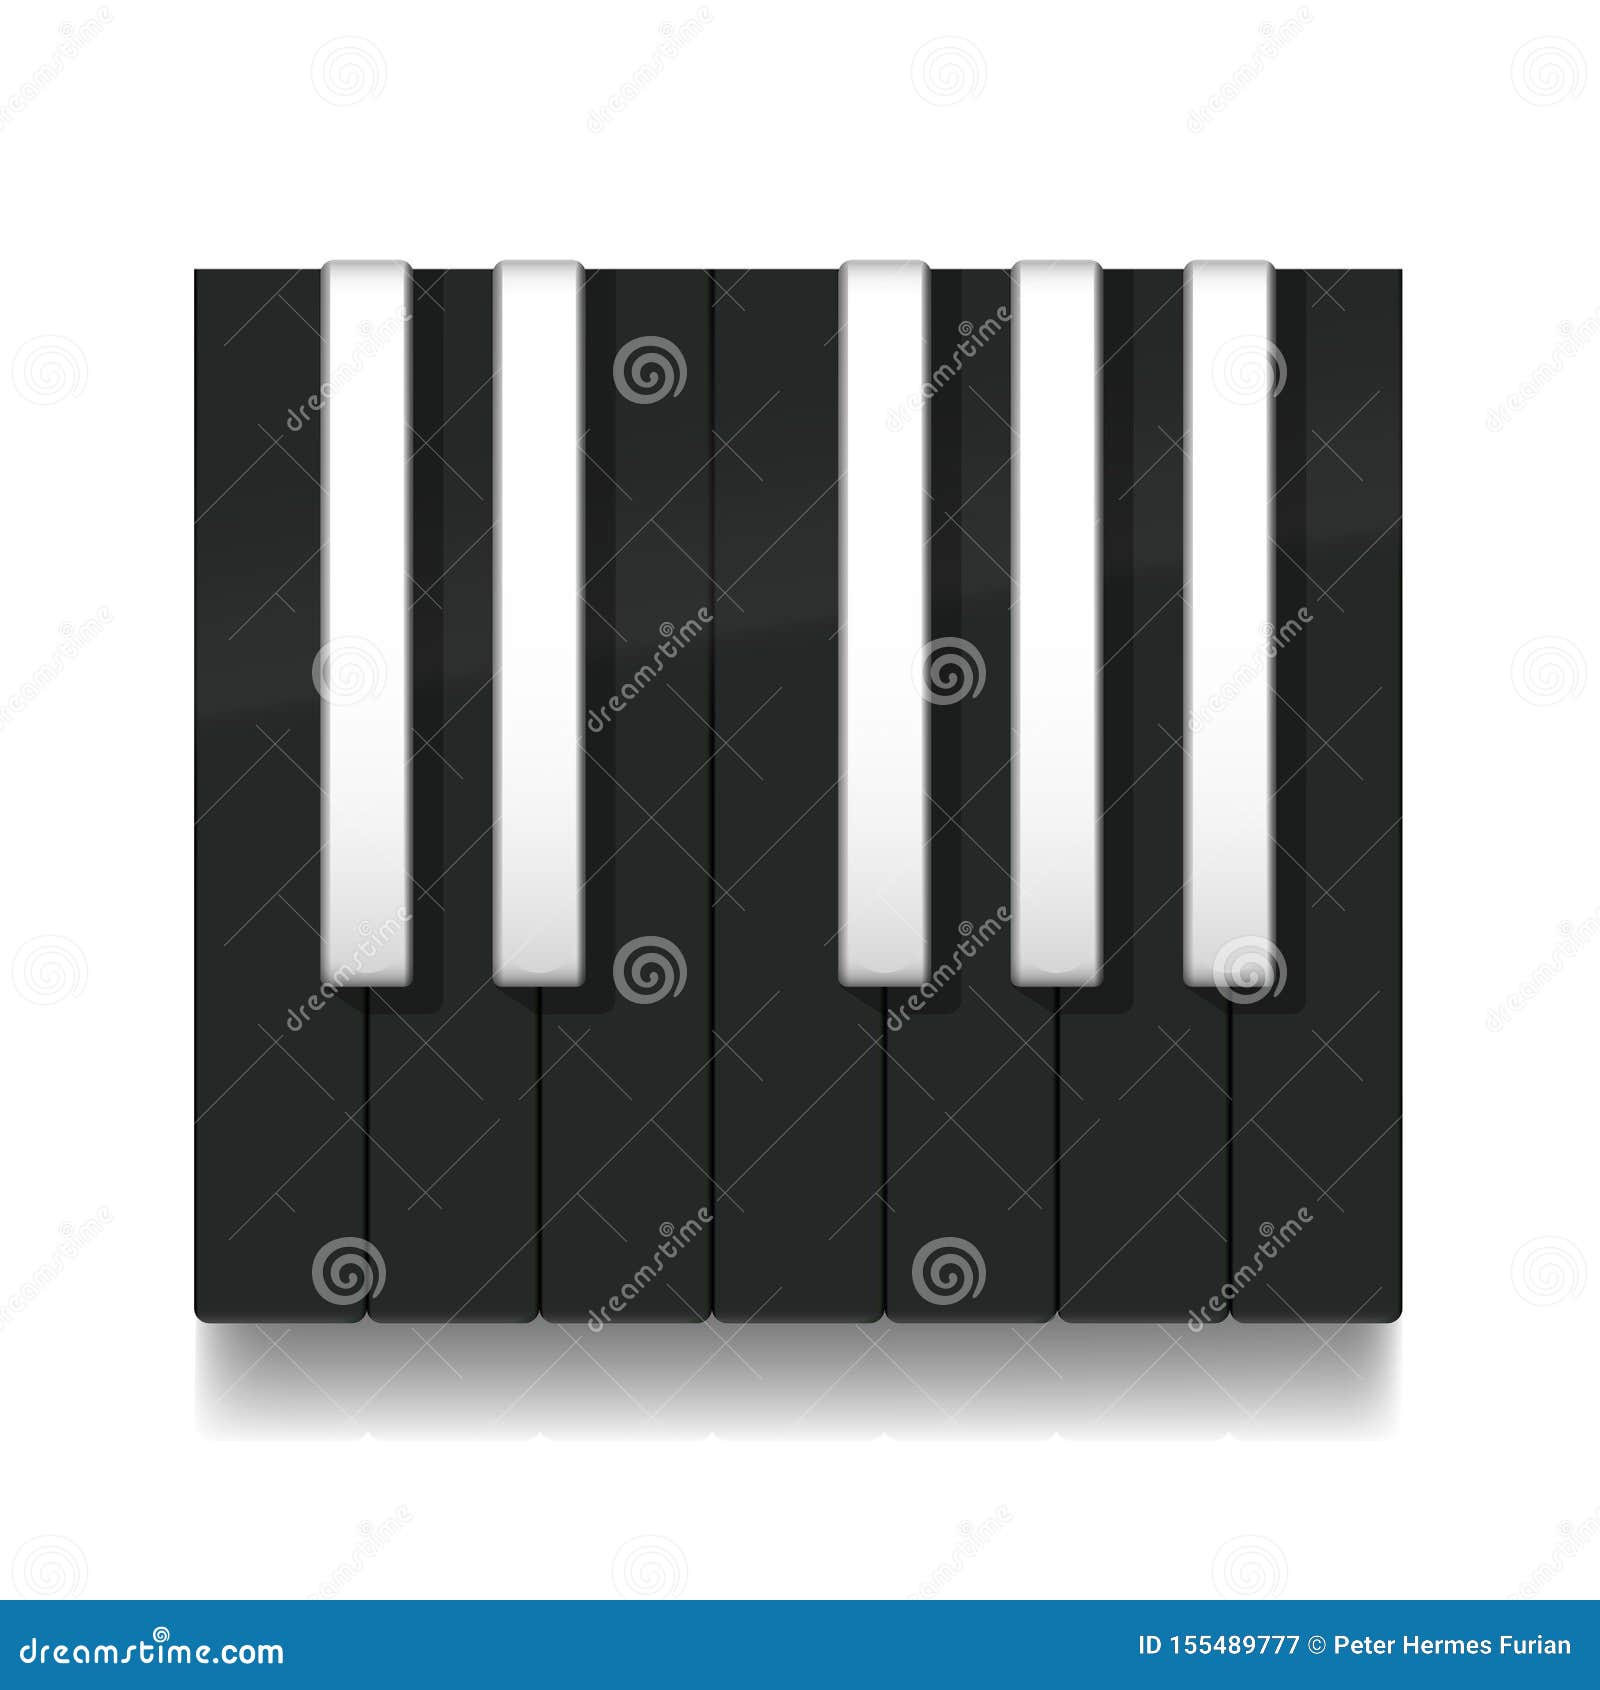 reverse piano keys inverse black octave